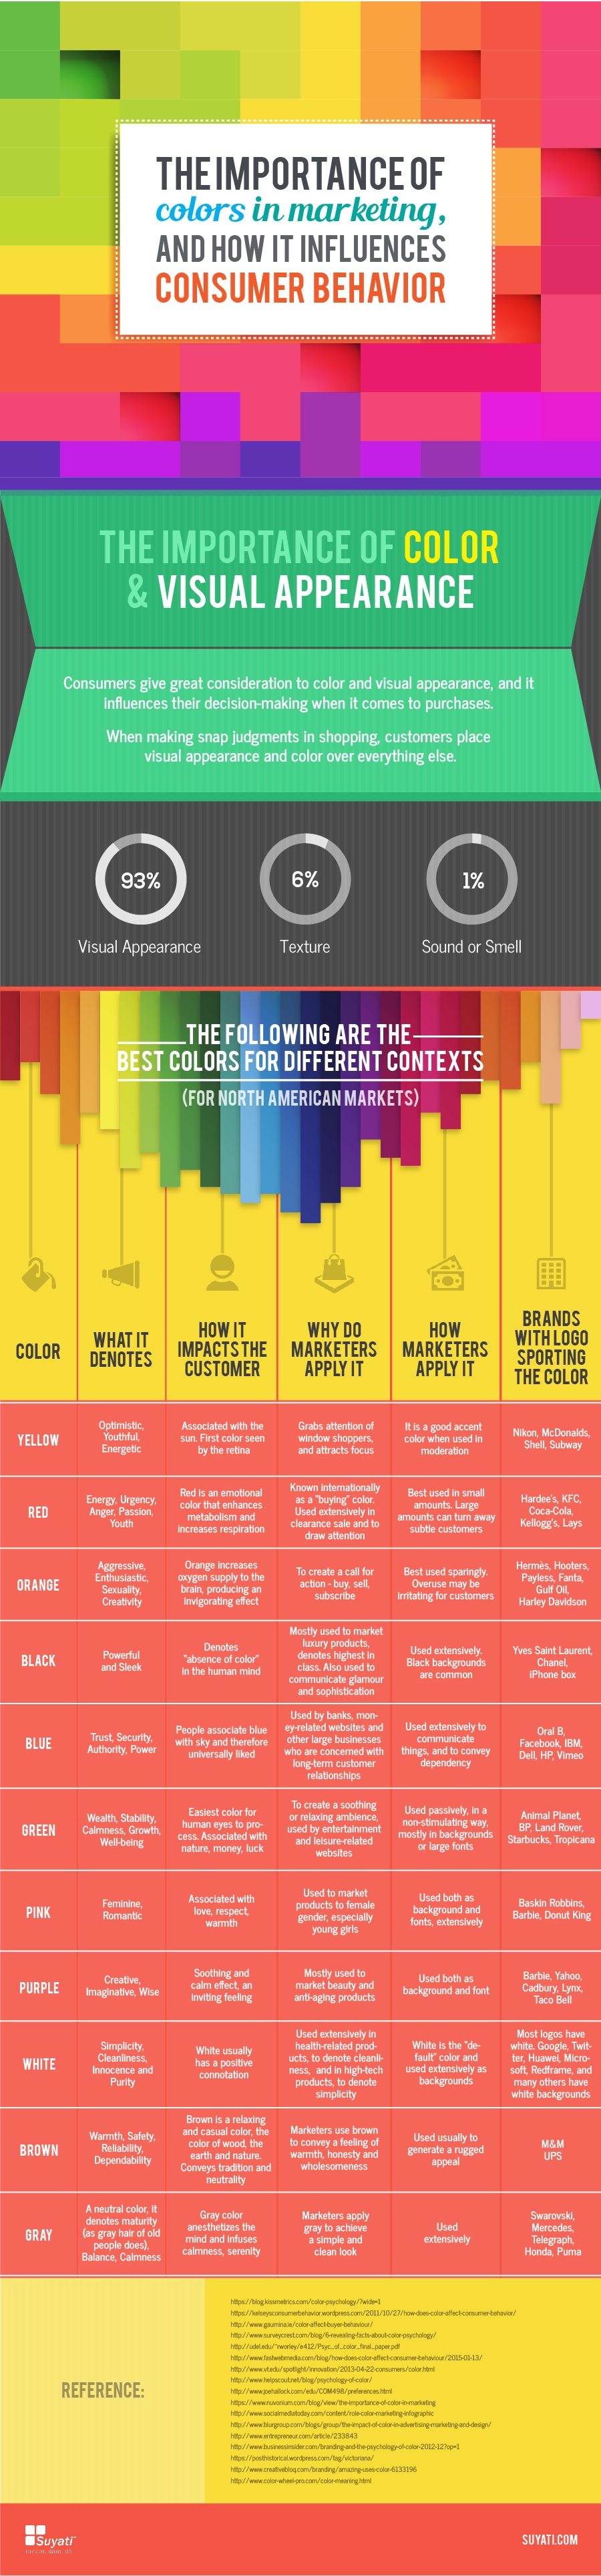 Color in Consumer Behavior